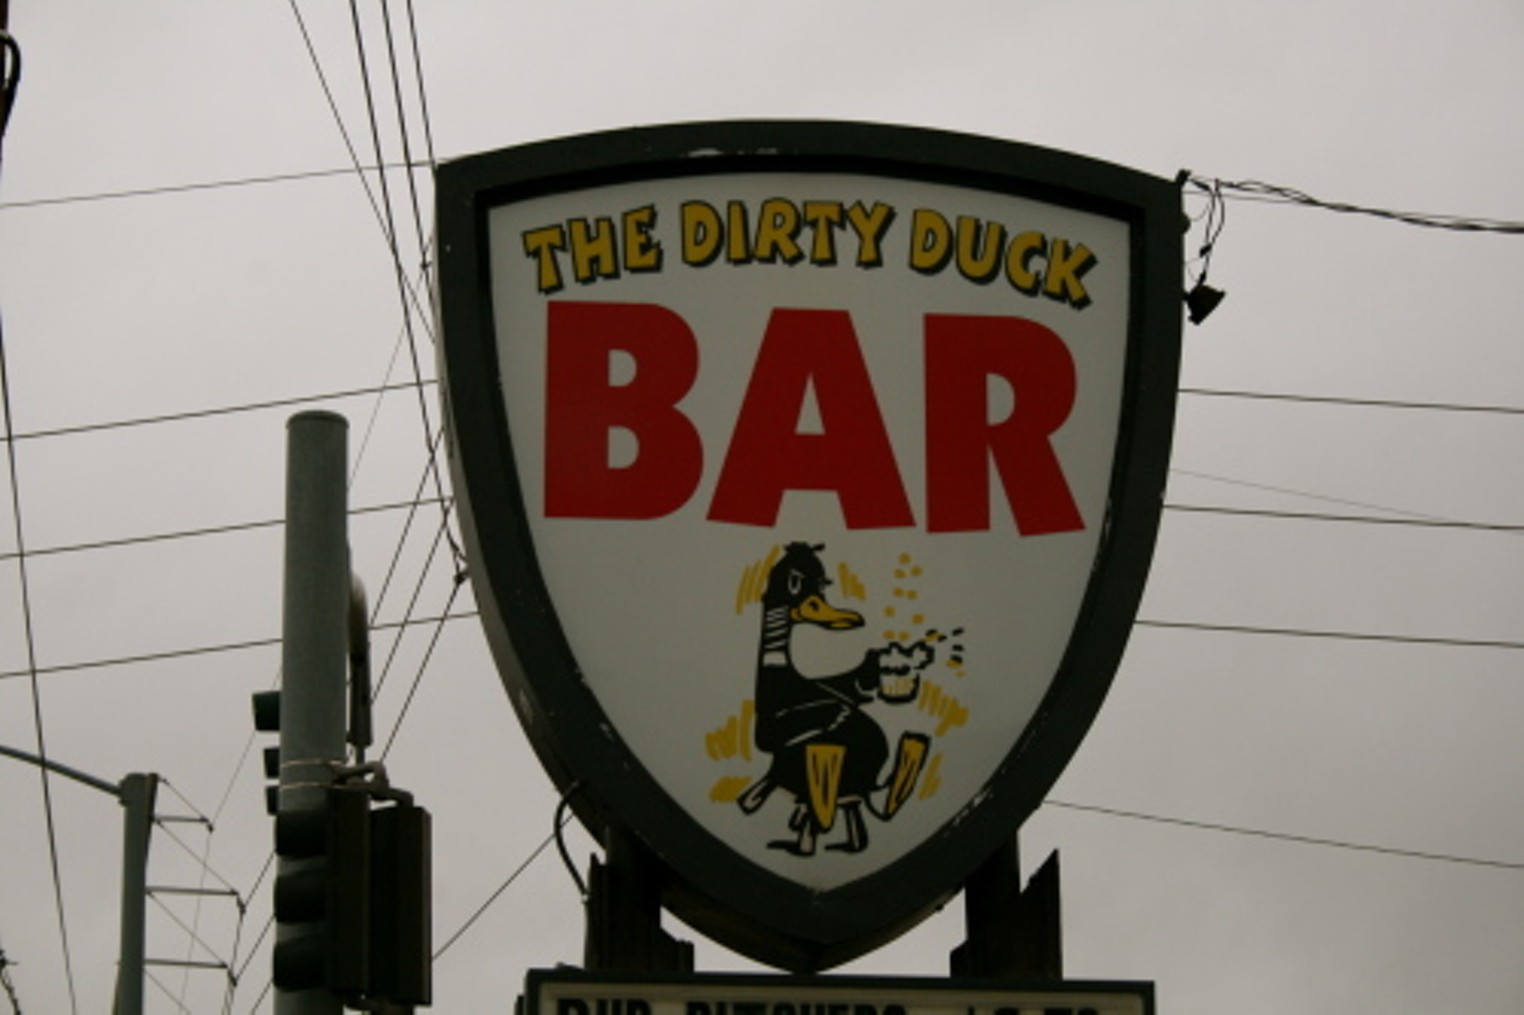 Dirty duck